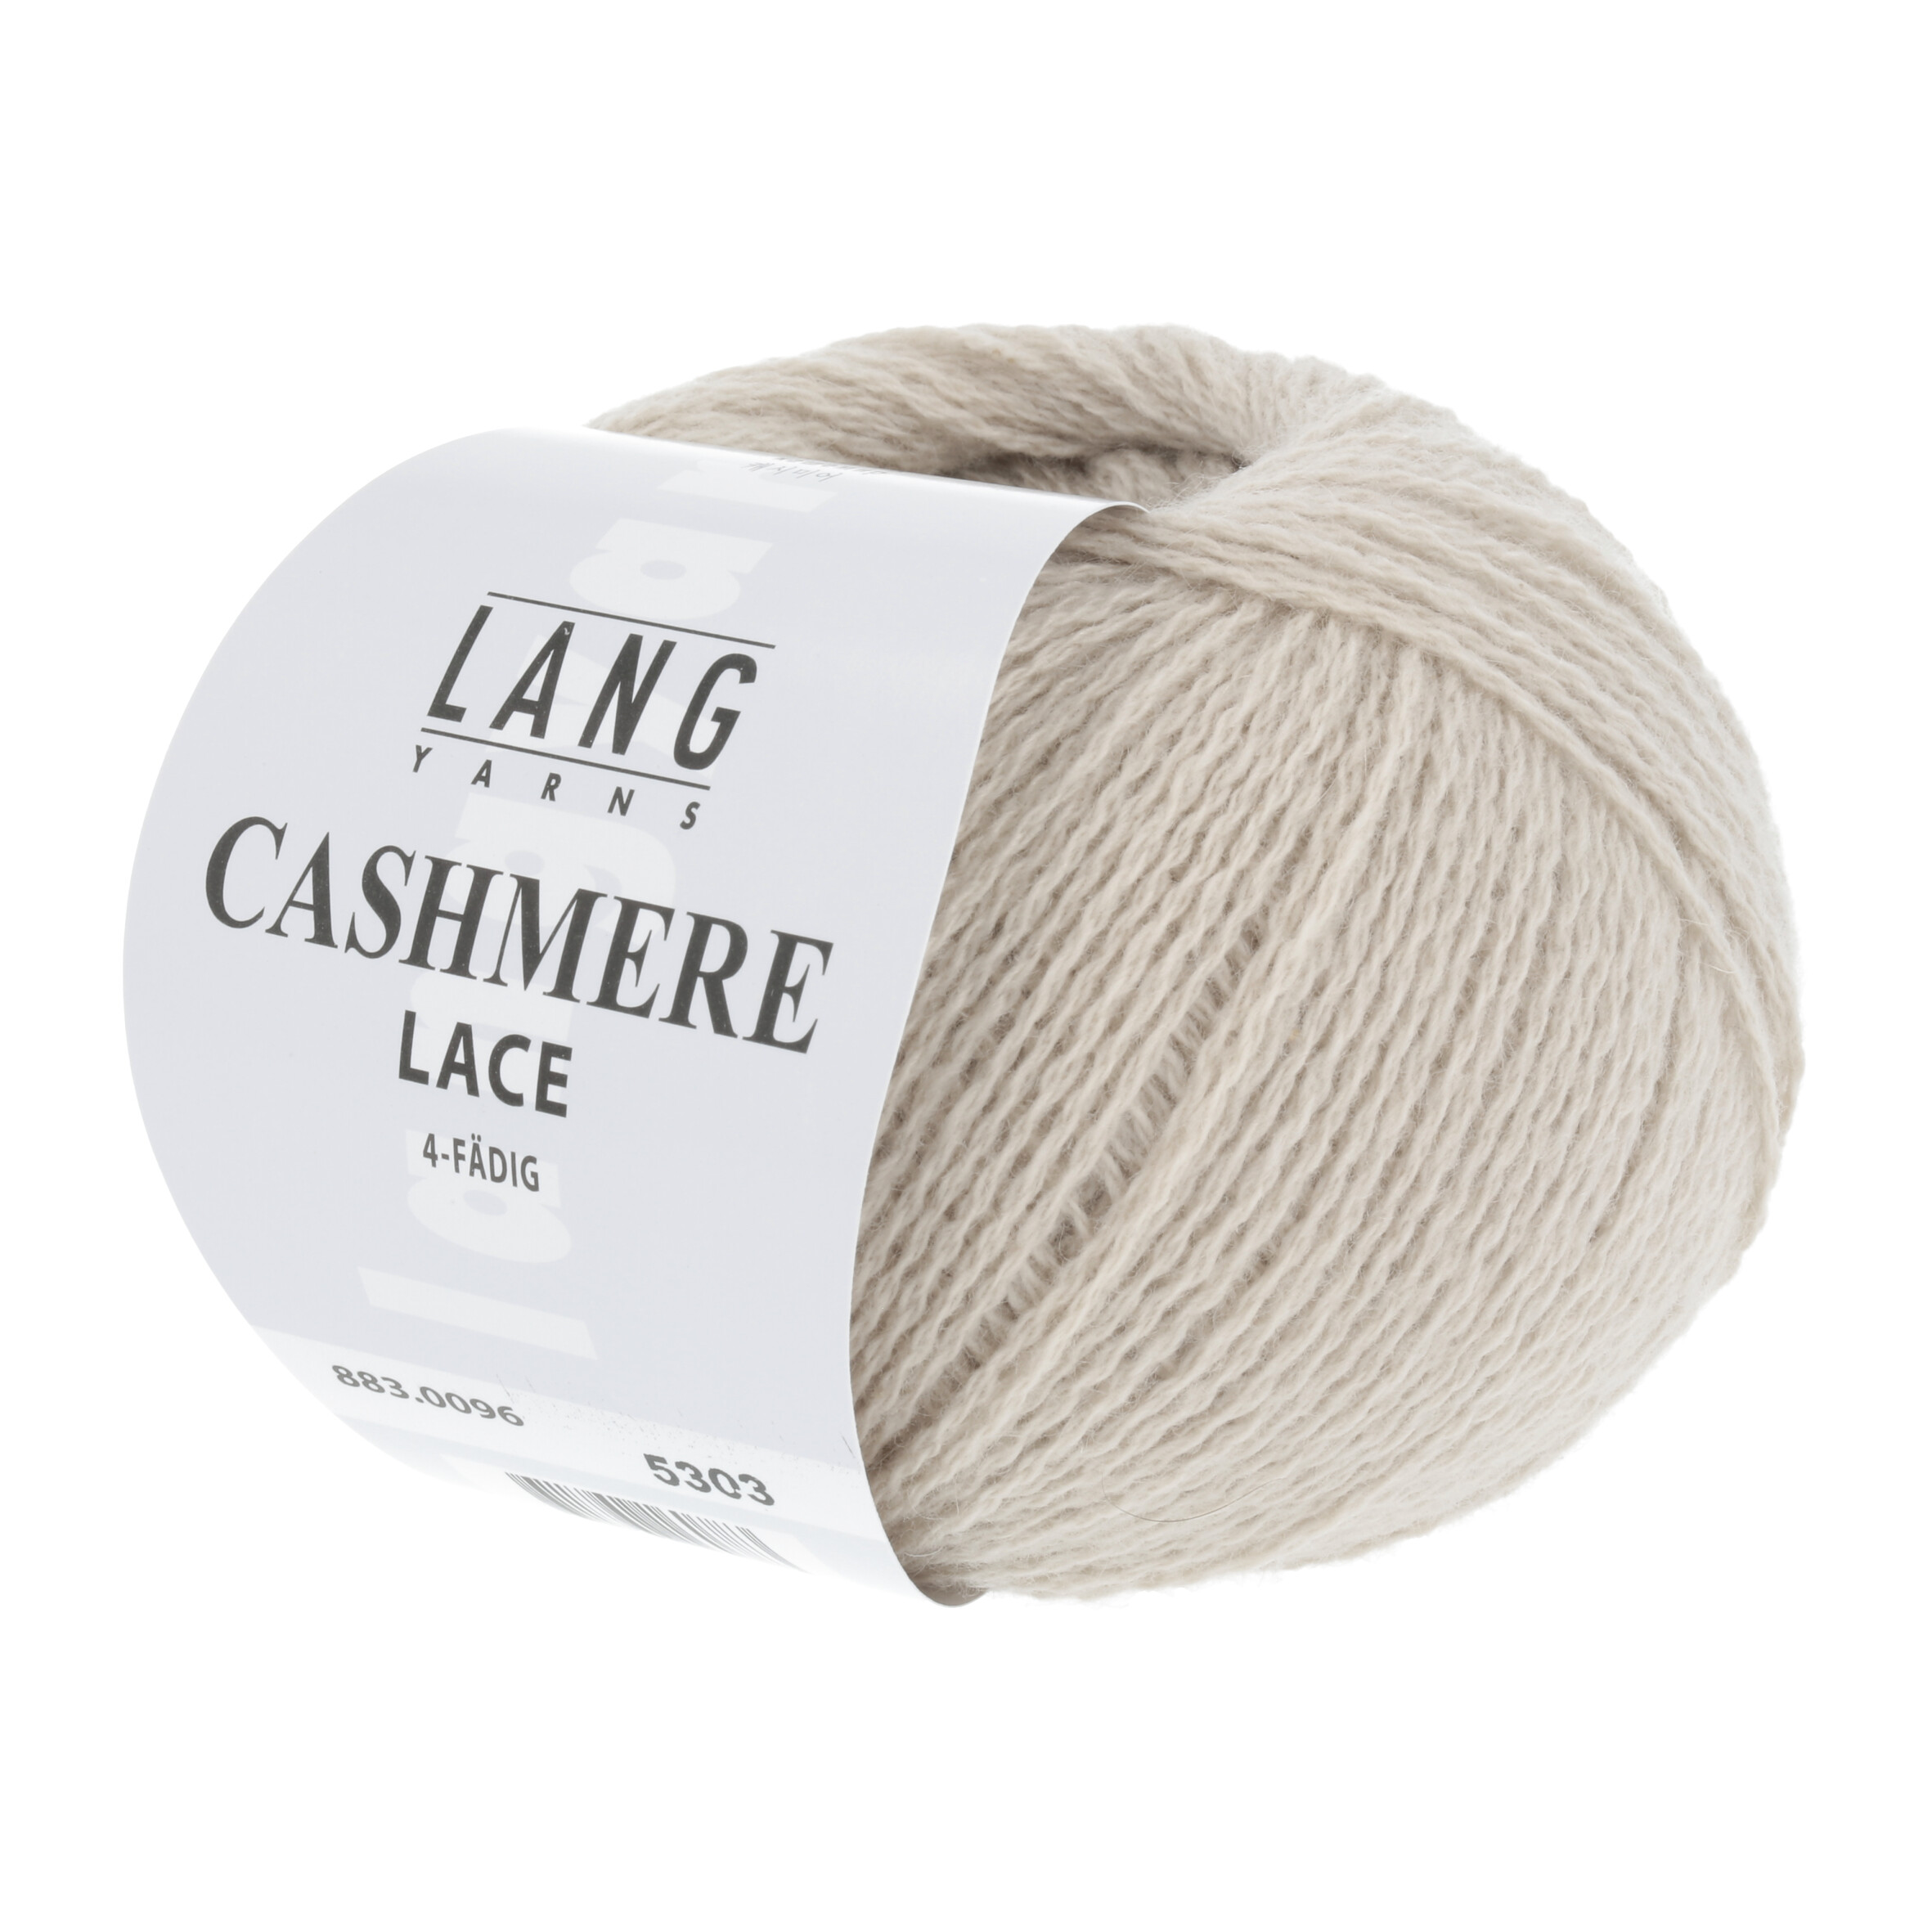 Cashmere Lace - Lang Yarns